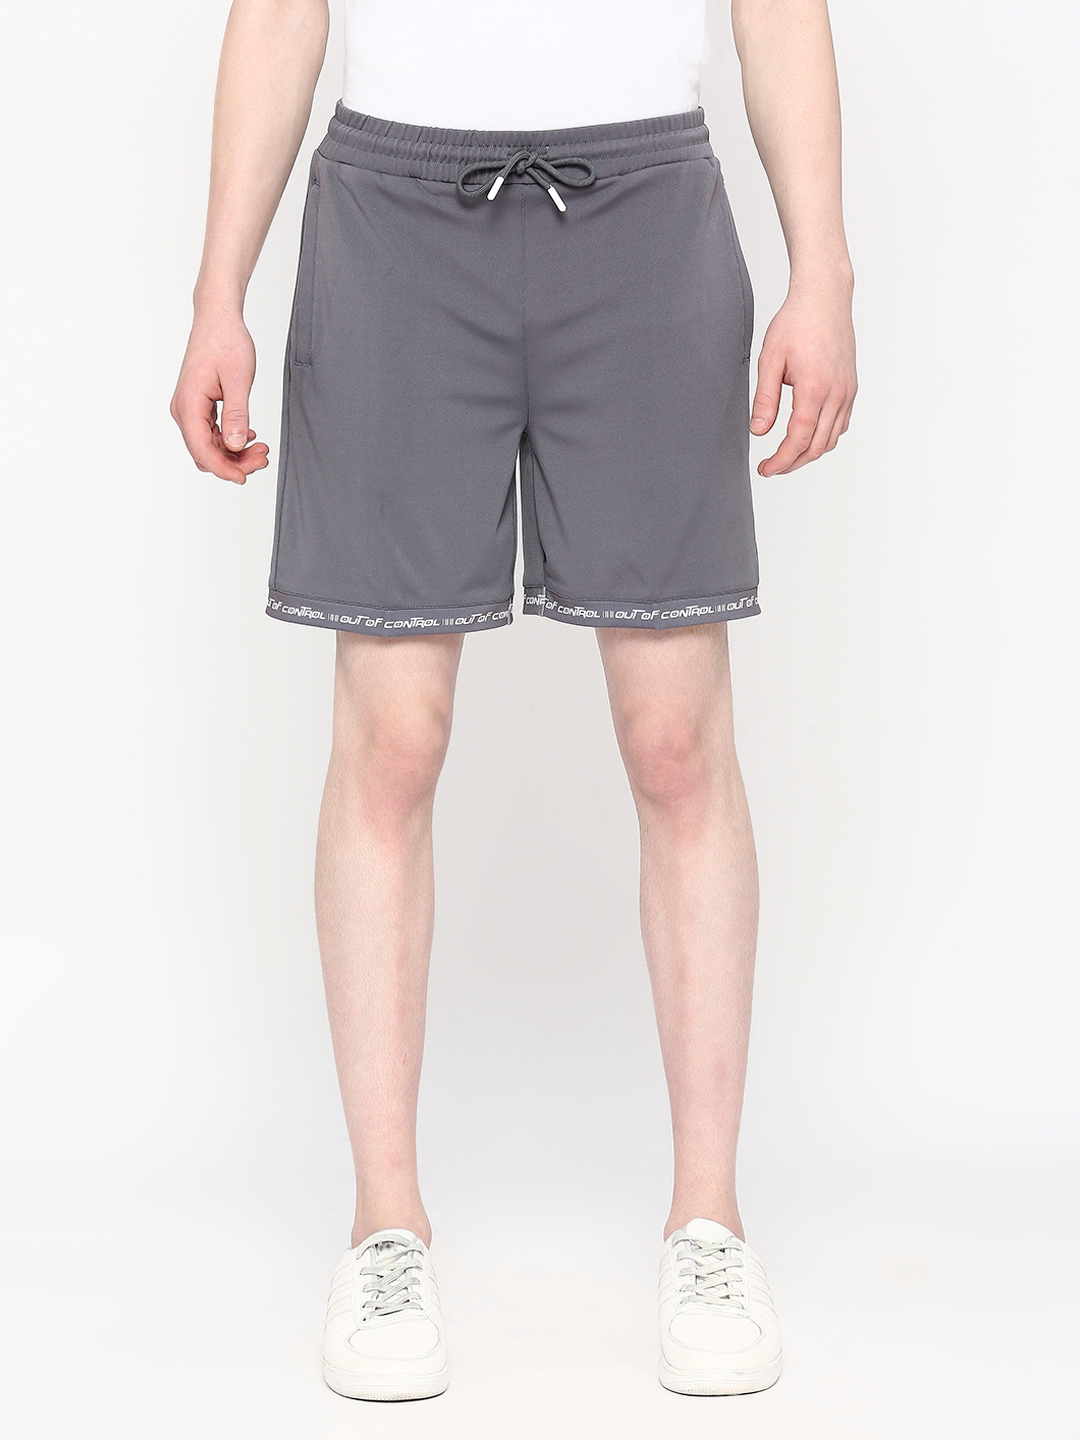 FITZ | Men's  Slim Fit Cotton Grey Shorts